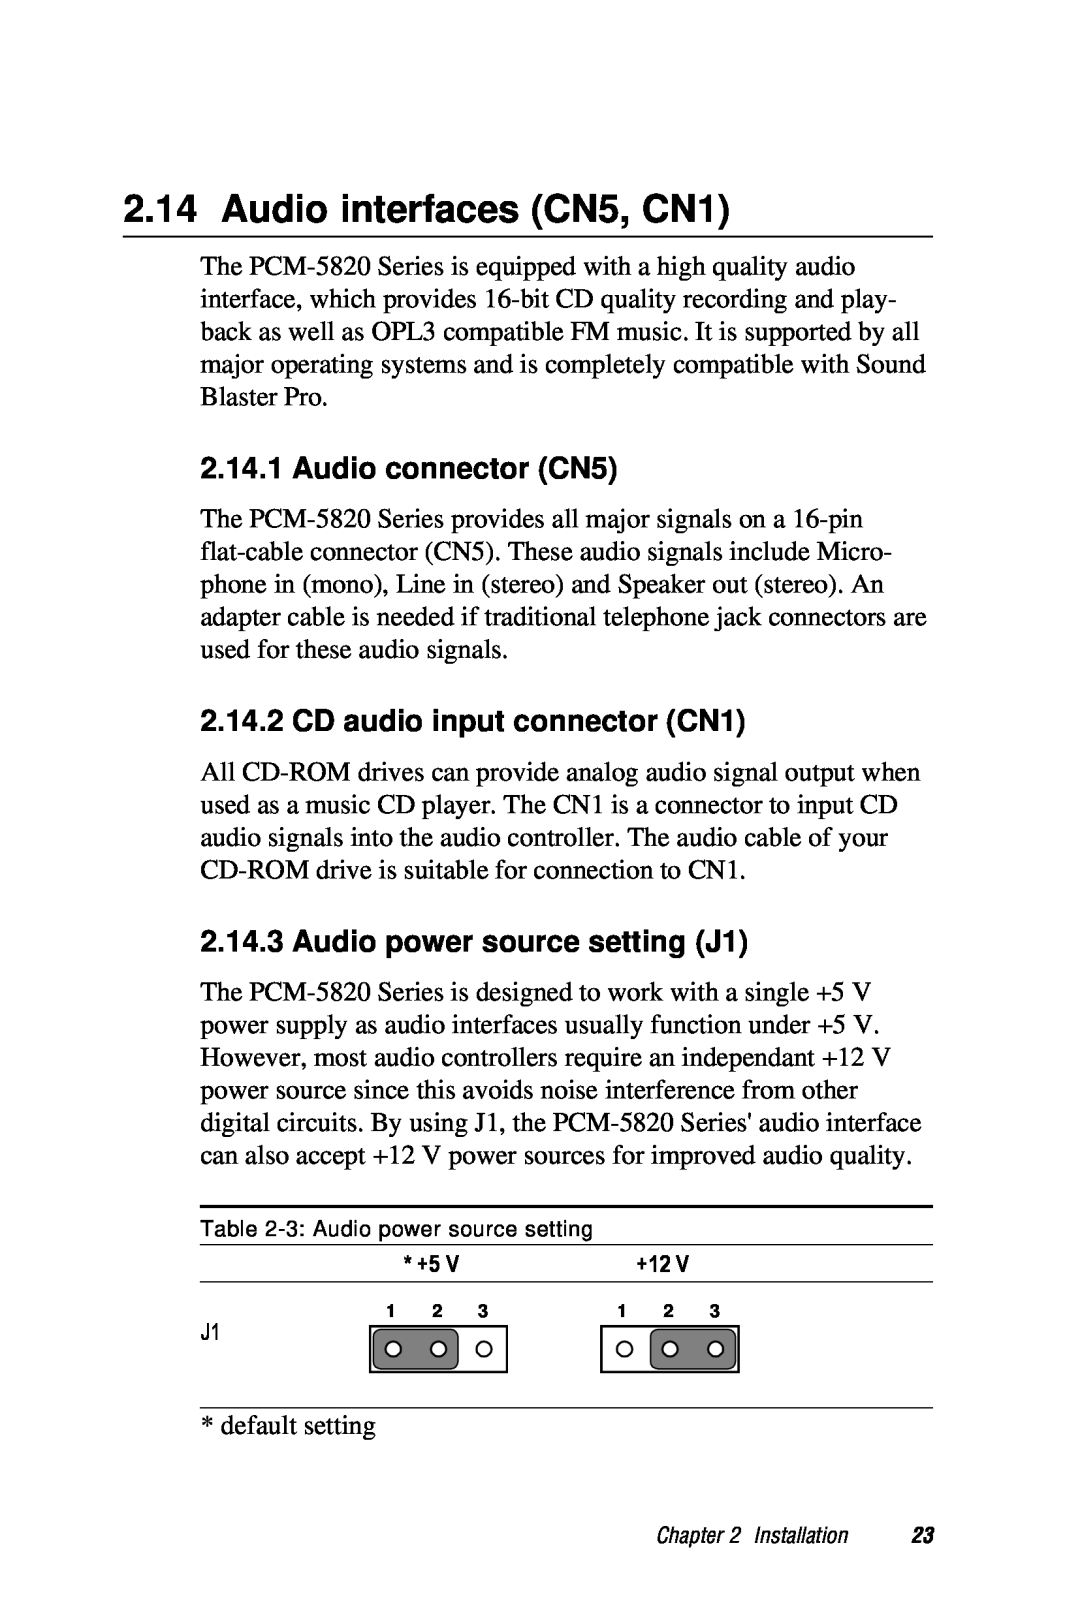 AMD PCM-5820 Audio interfaces CN5, CN1, Audio connector CN5, CD audio input connector CN1, Audio power source setting J1 